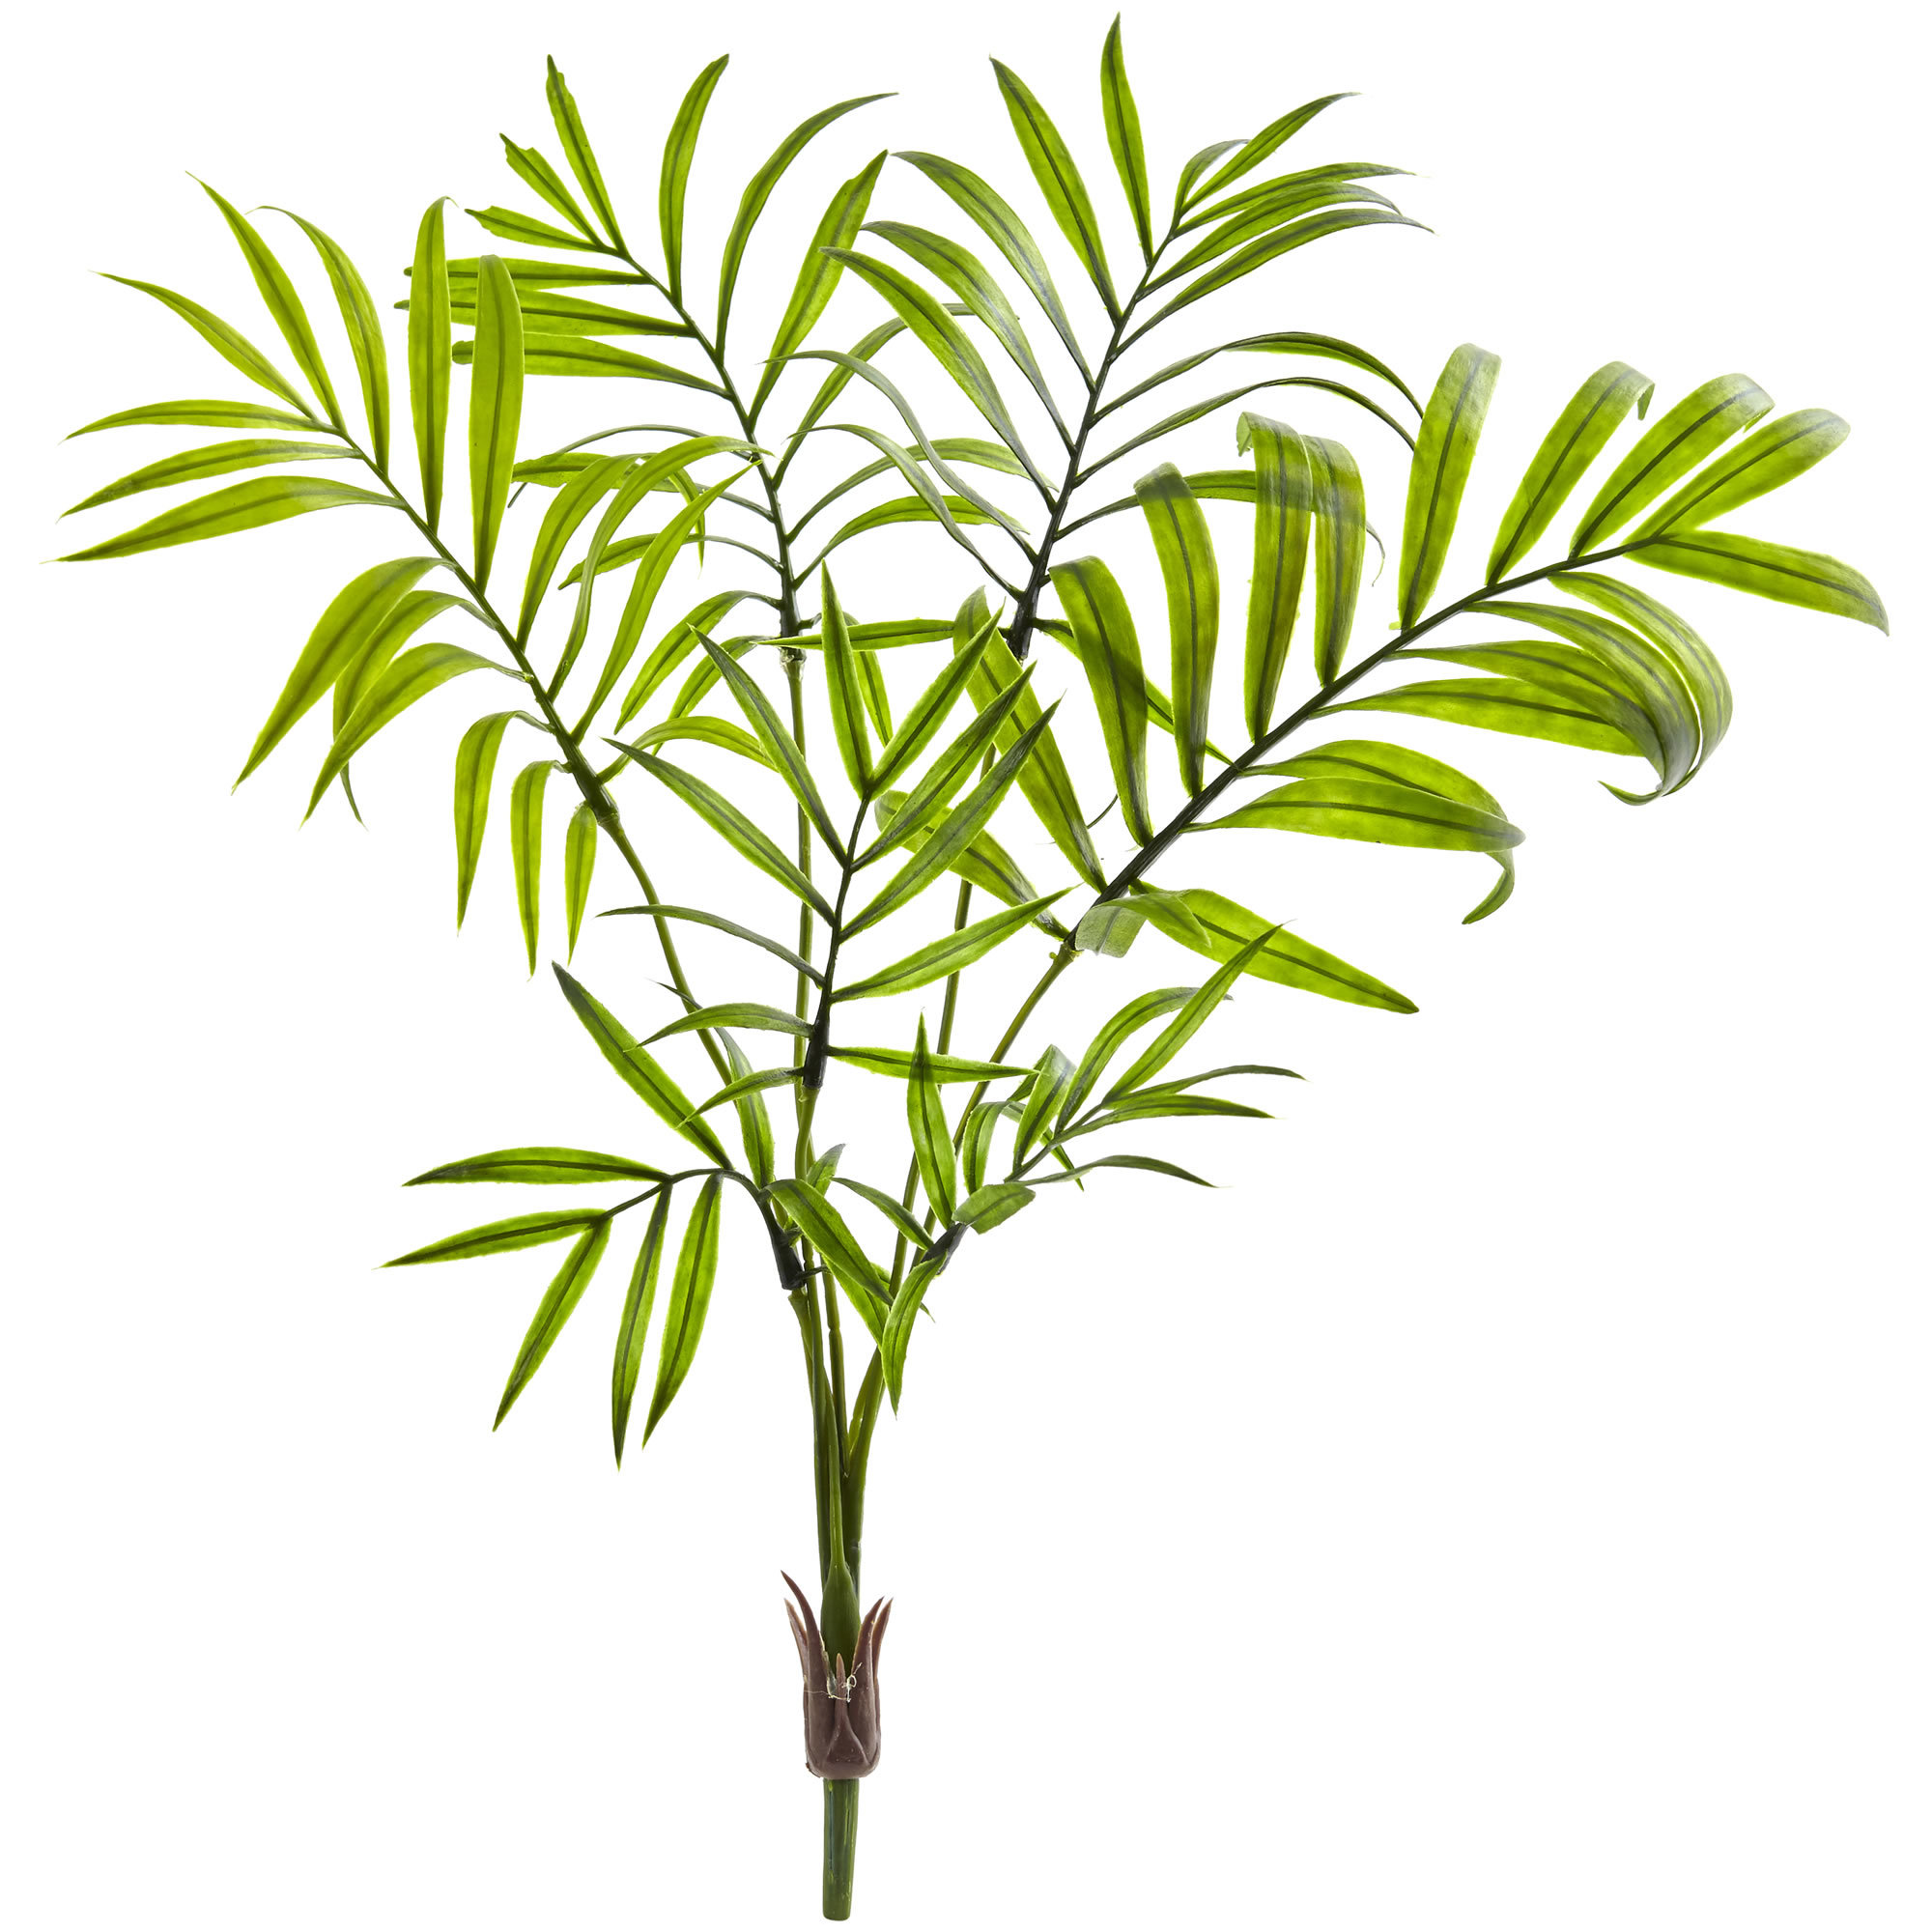 Bay Isle Home Green Mini Areca Palm Plant & Reviews | Wayfair